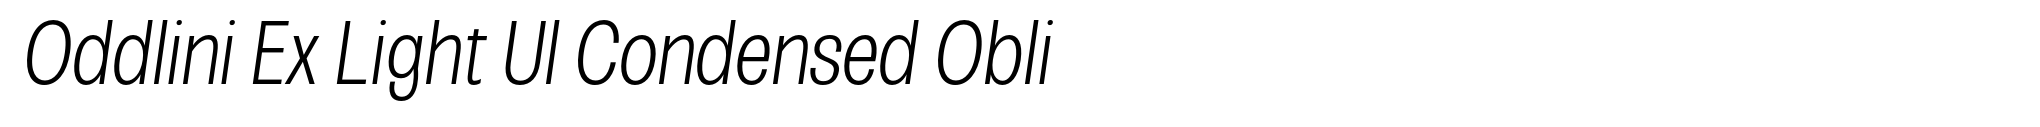 Oddlini Ex Light Ul Condensed Obli image